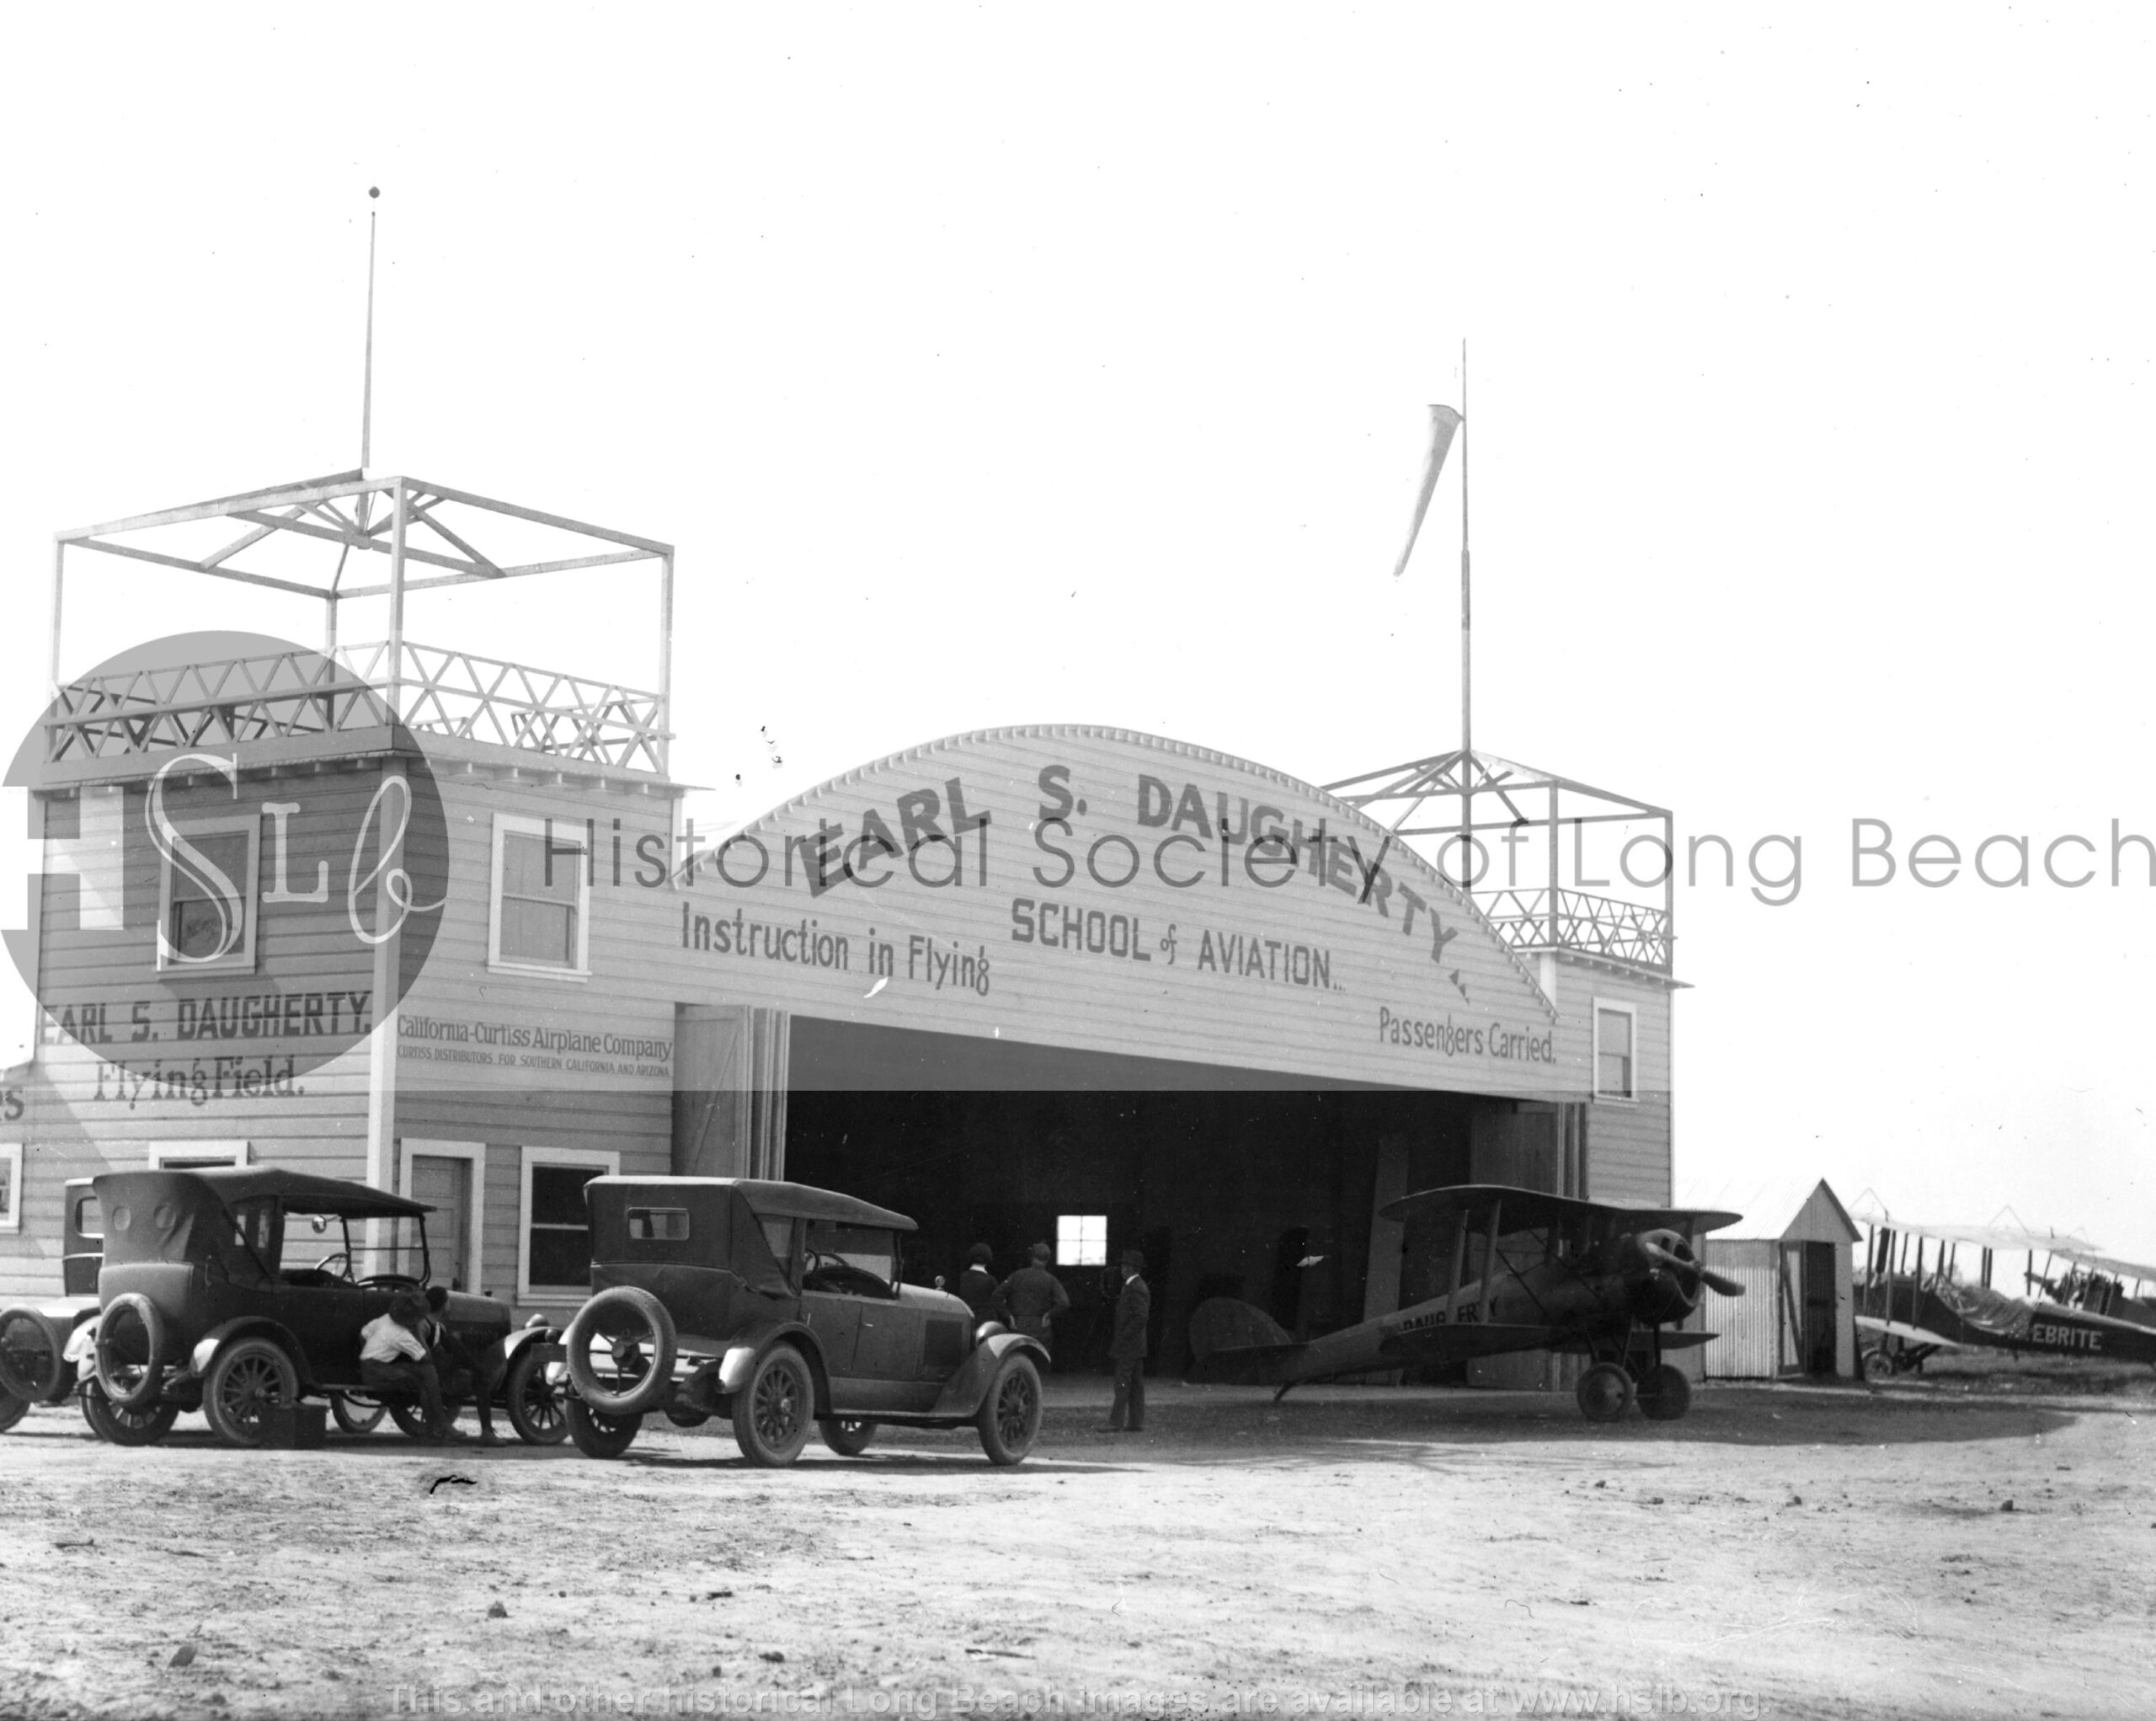 Daugherty School of Aviation, c. 1921